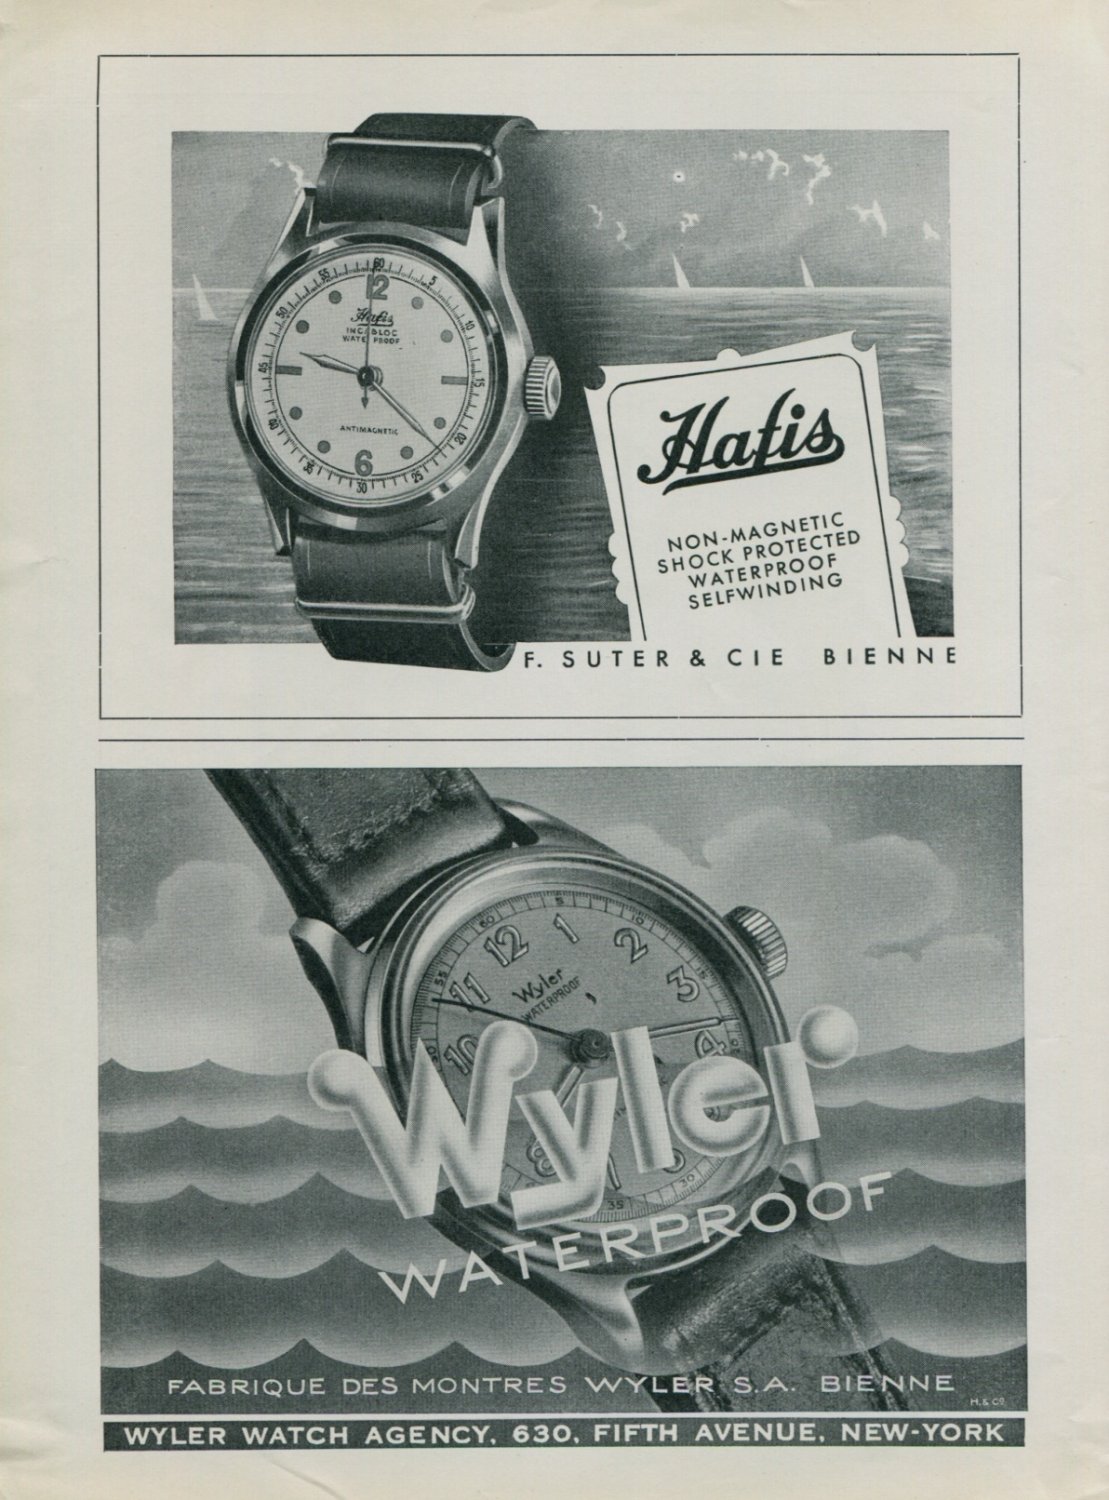 1944 Hafis Watch Company F Suter Wyler Watch Co. Switzerland Swiss Ad Suisse Advert